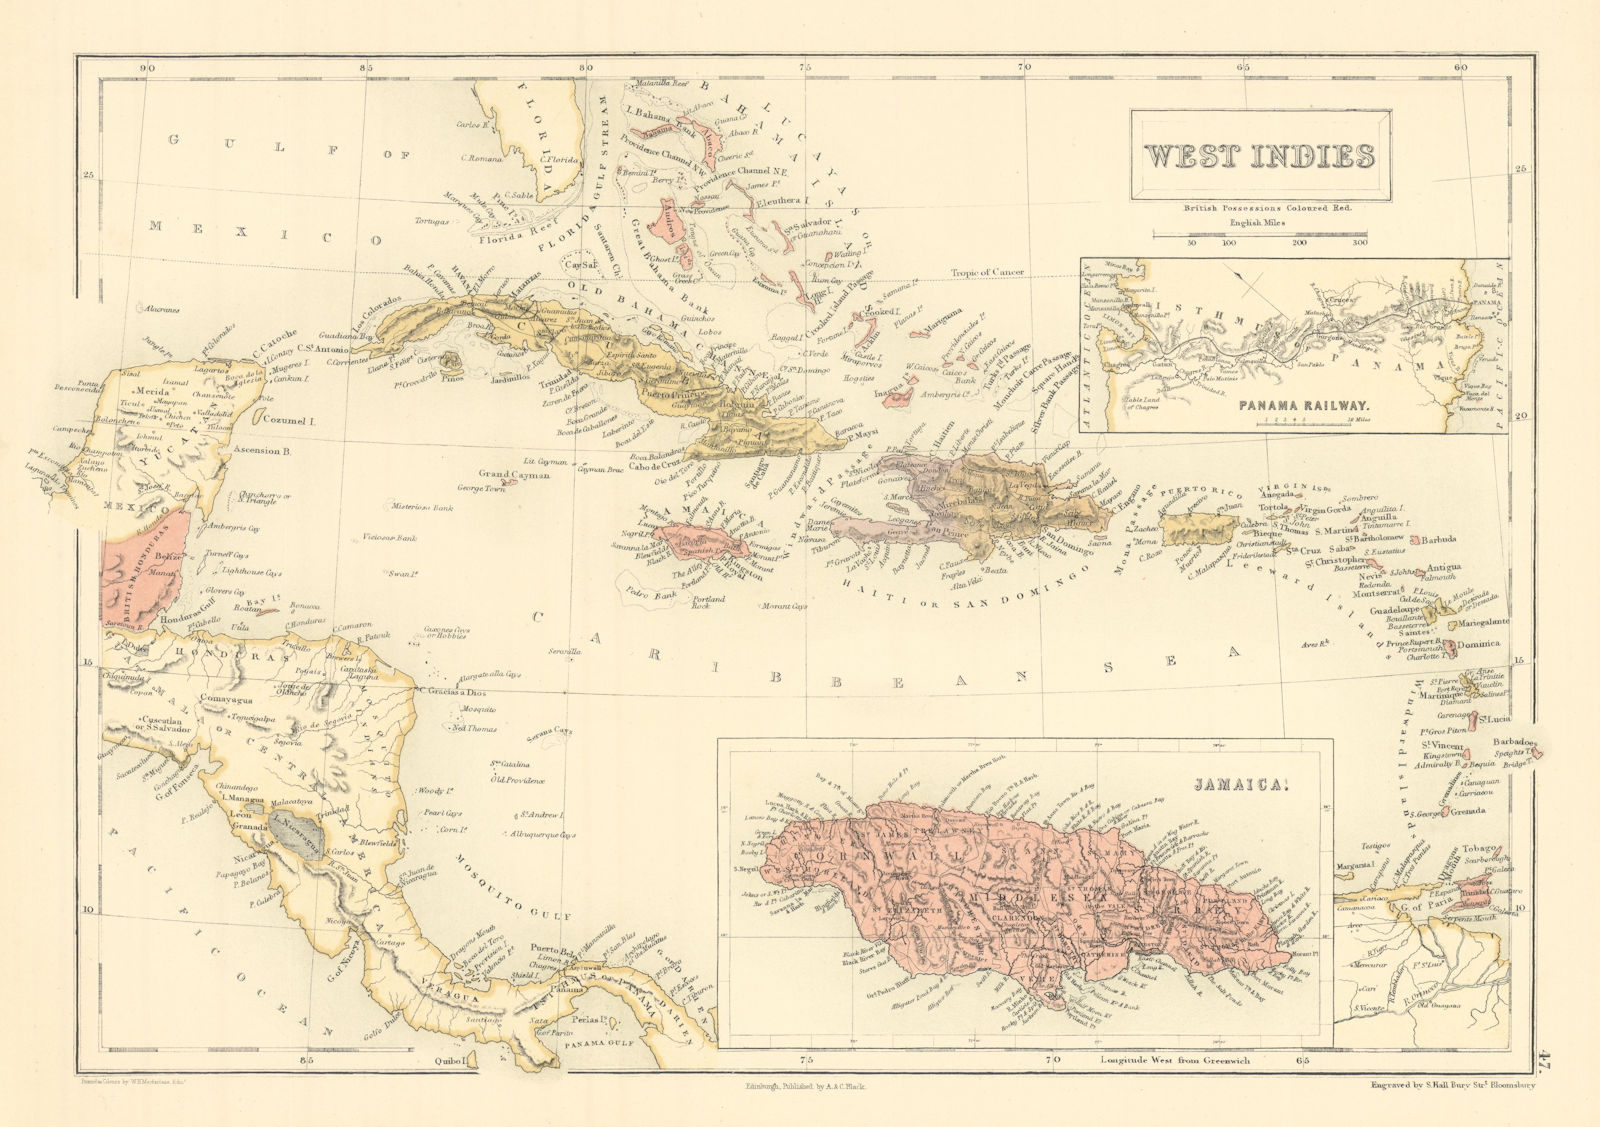 West Indies. Inset Panama Railway & Jamaica. Caribbean. SIDNEY HALL 1862 map